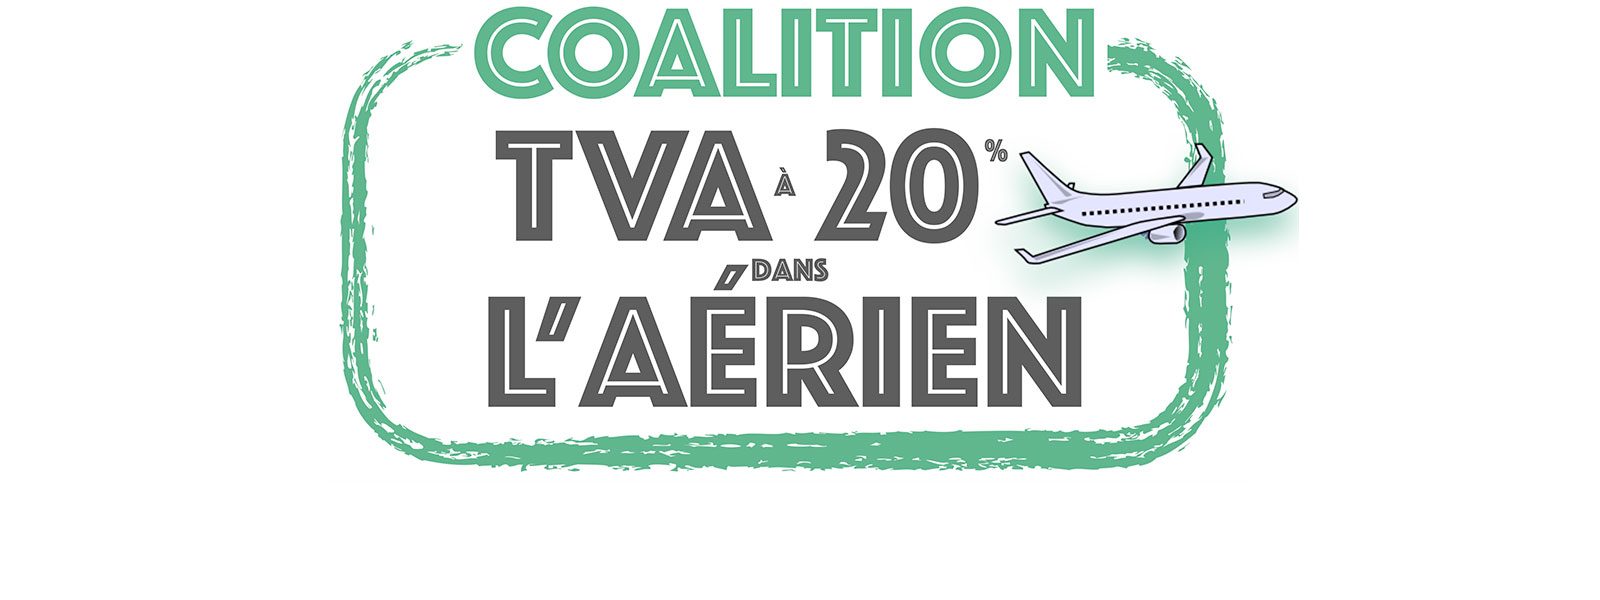 coalition-v4